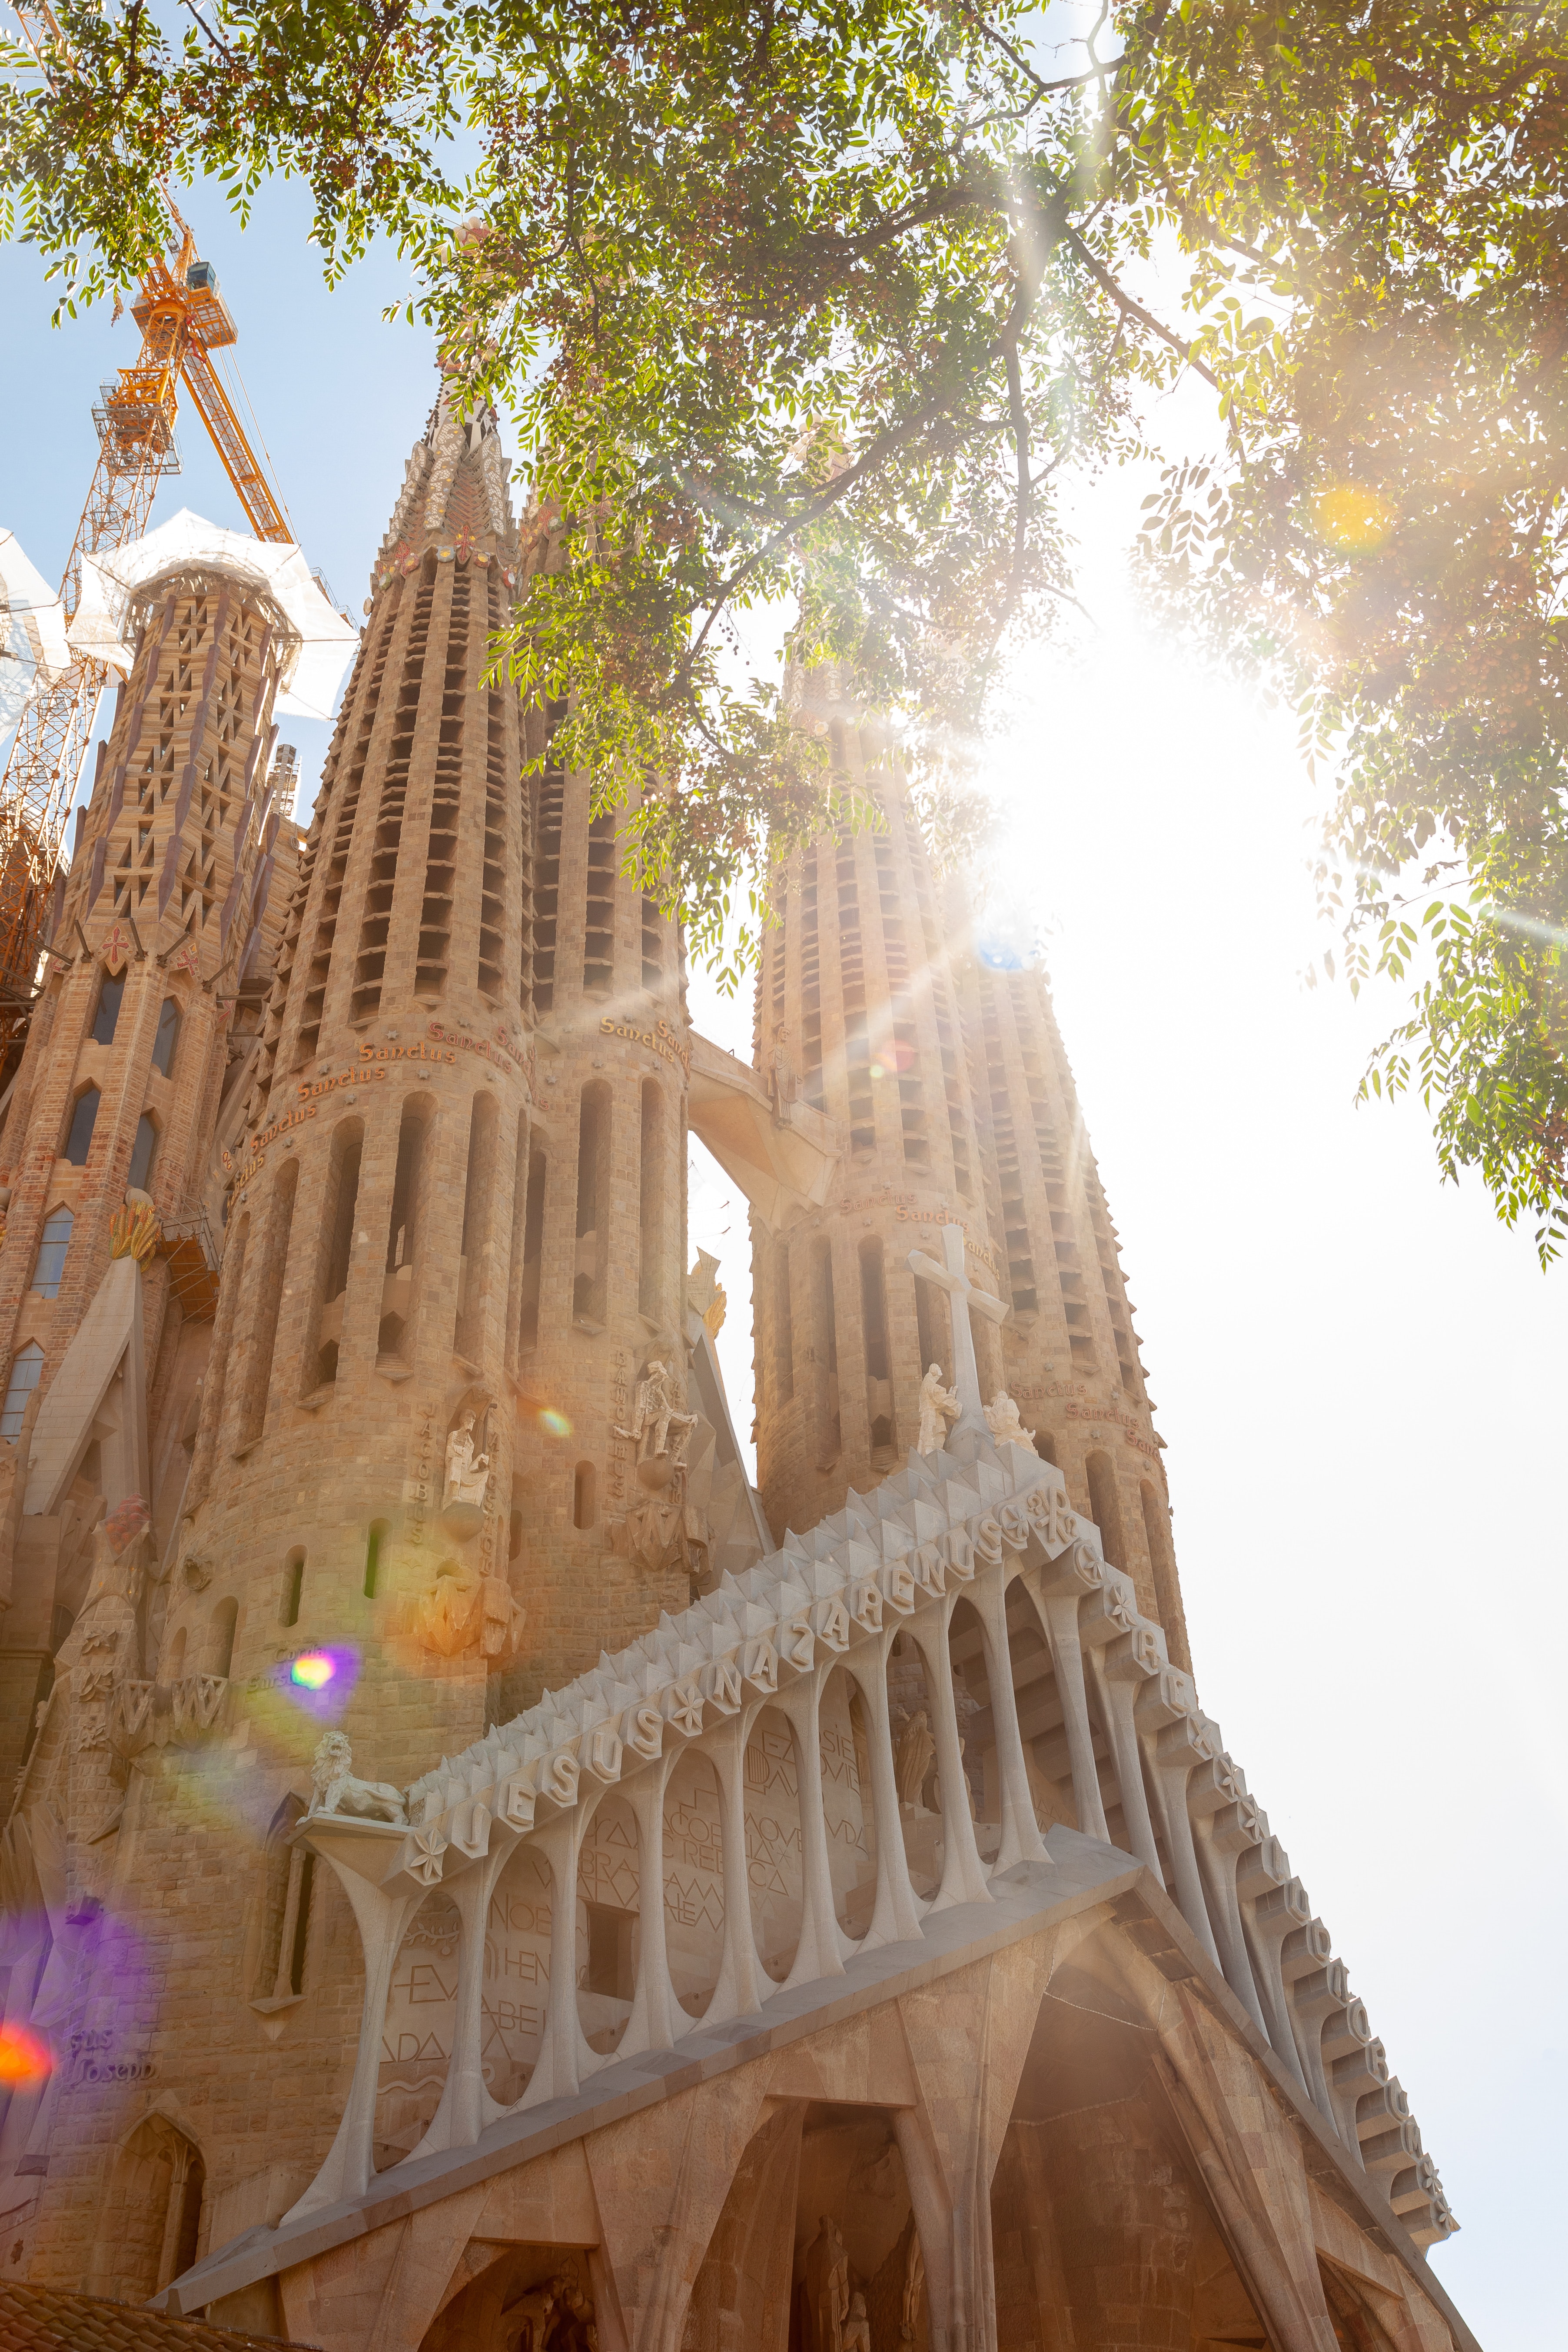 Pay A Visit To The Sagrada Familia